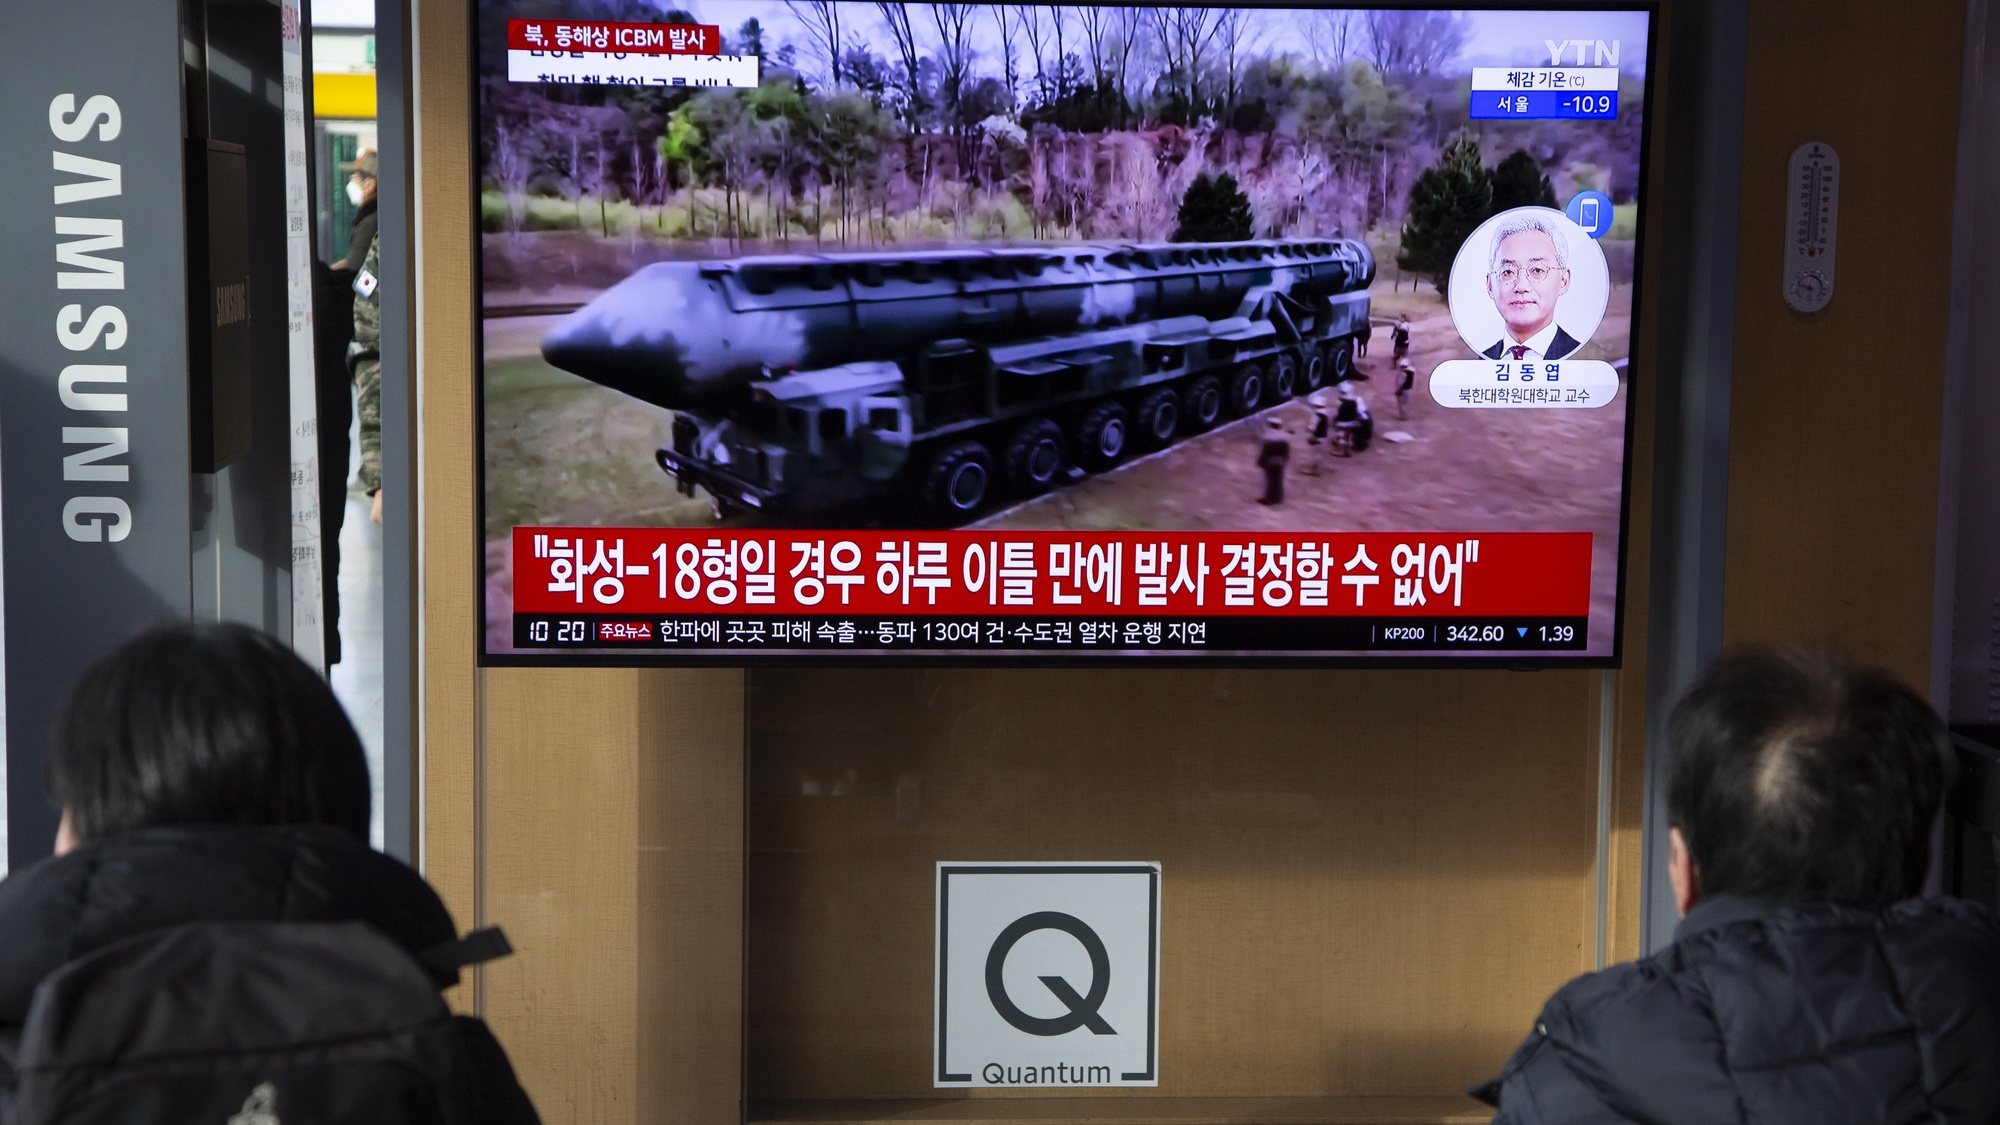 Seul confirma que Pyongyang disparou míssil balístico intercontinental